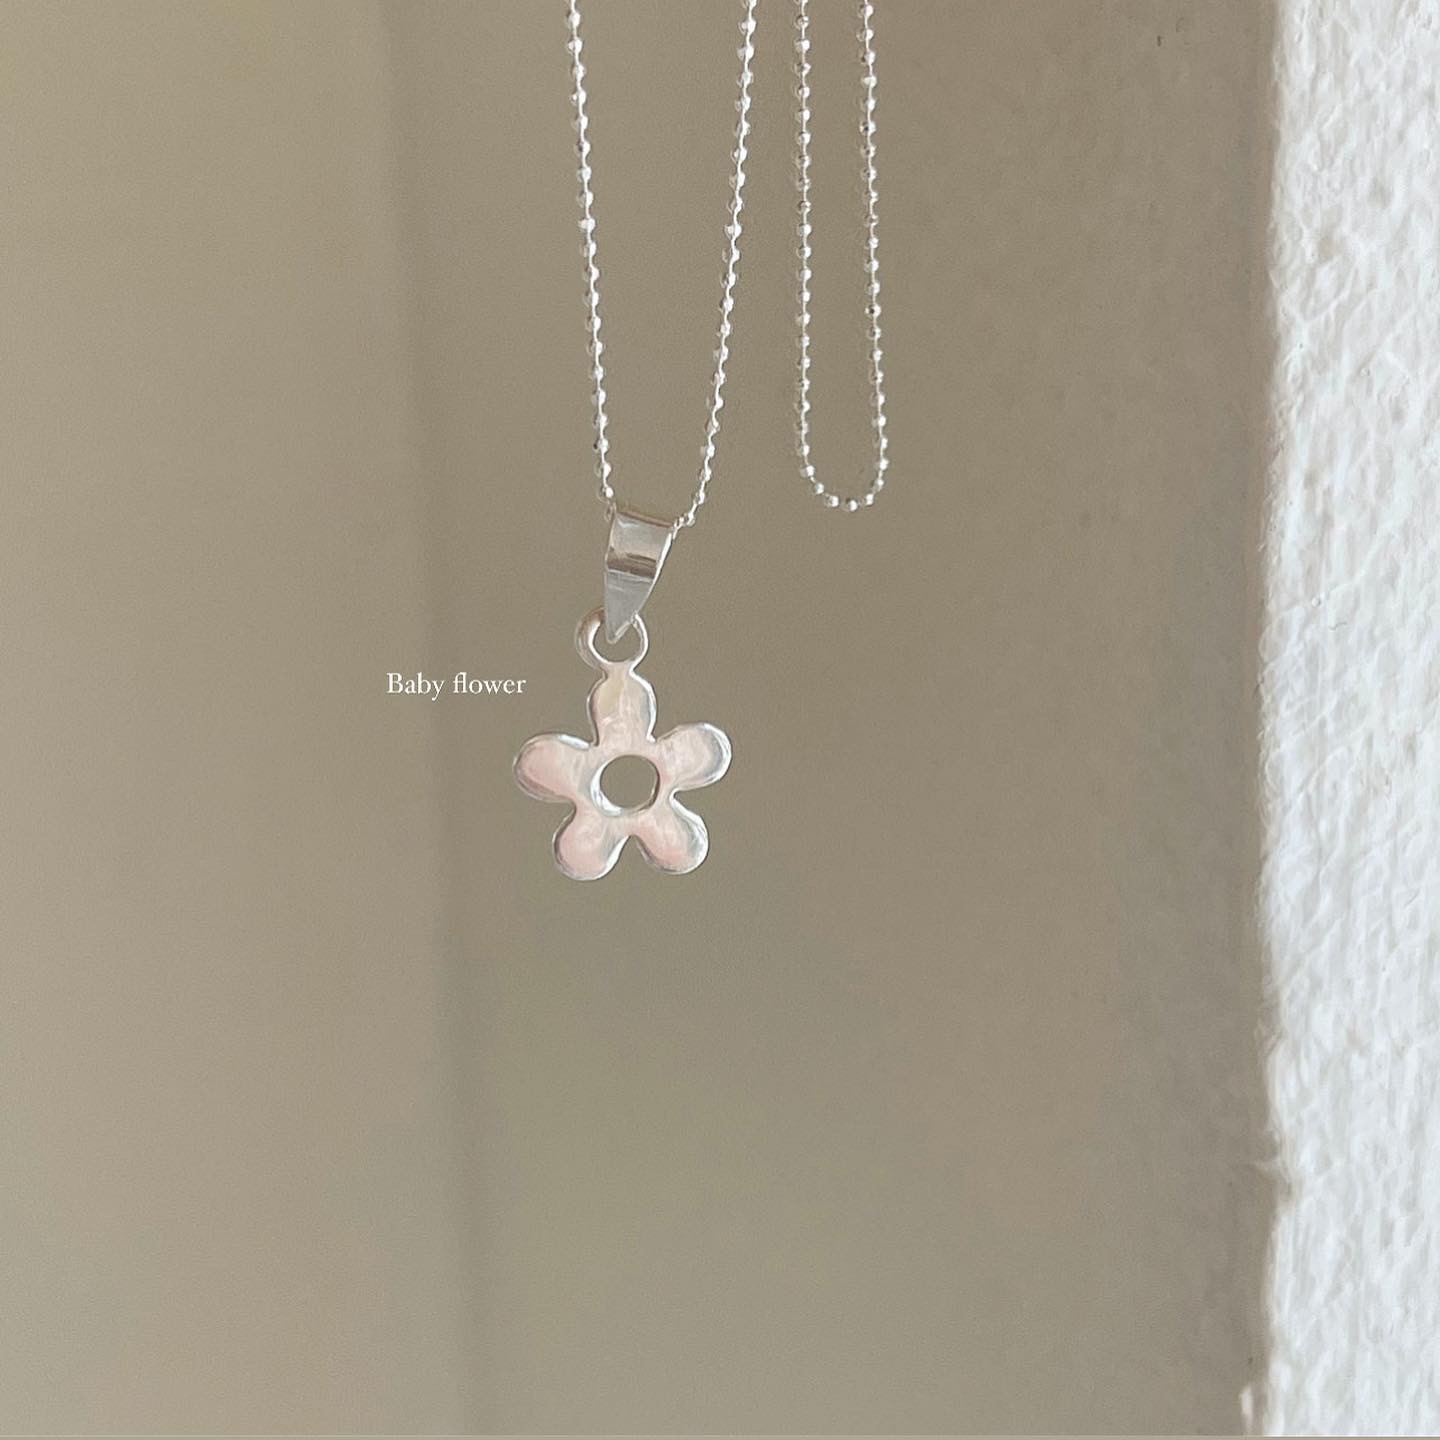 Your wishlist / Baby flower necklace silver925 / สร้อยคอเงินแท้ห้อยจี้ดอกไม้ (เลือกแบบสร้อยเองได้)